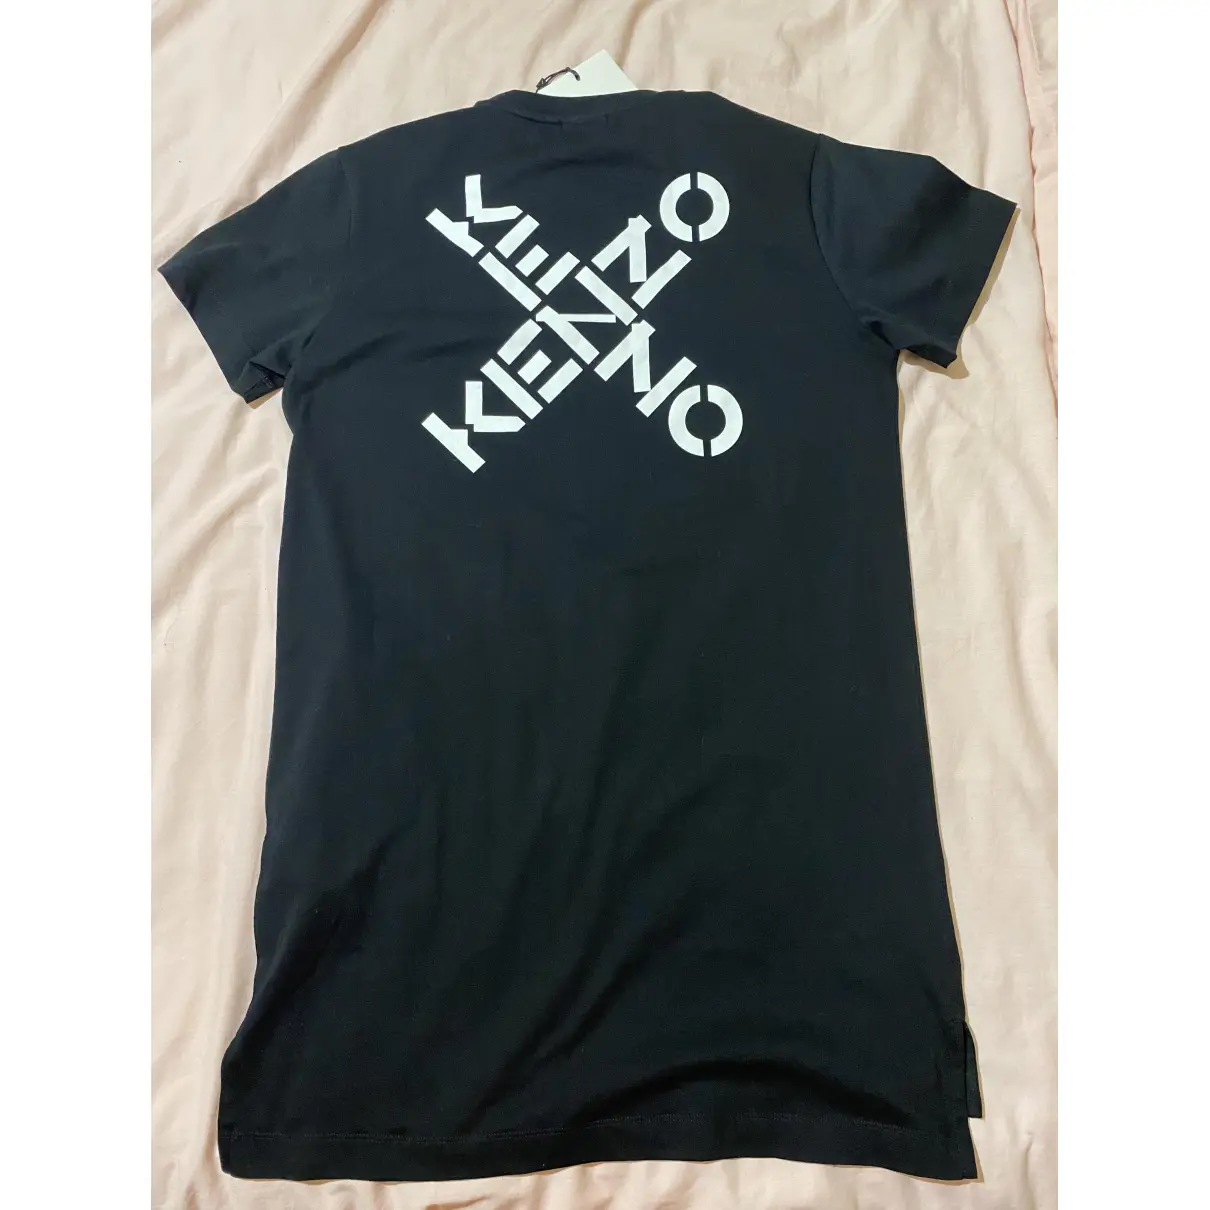 Buy Kenzo T-shirt online